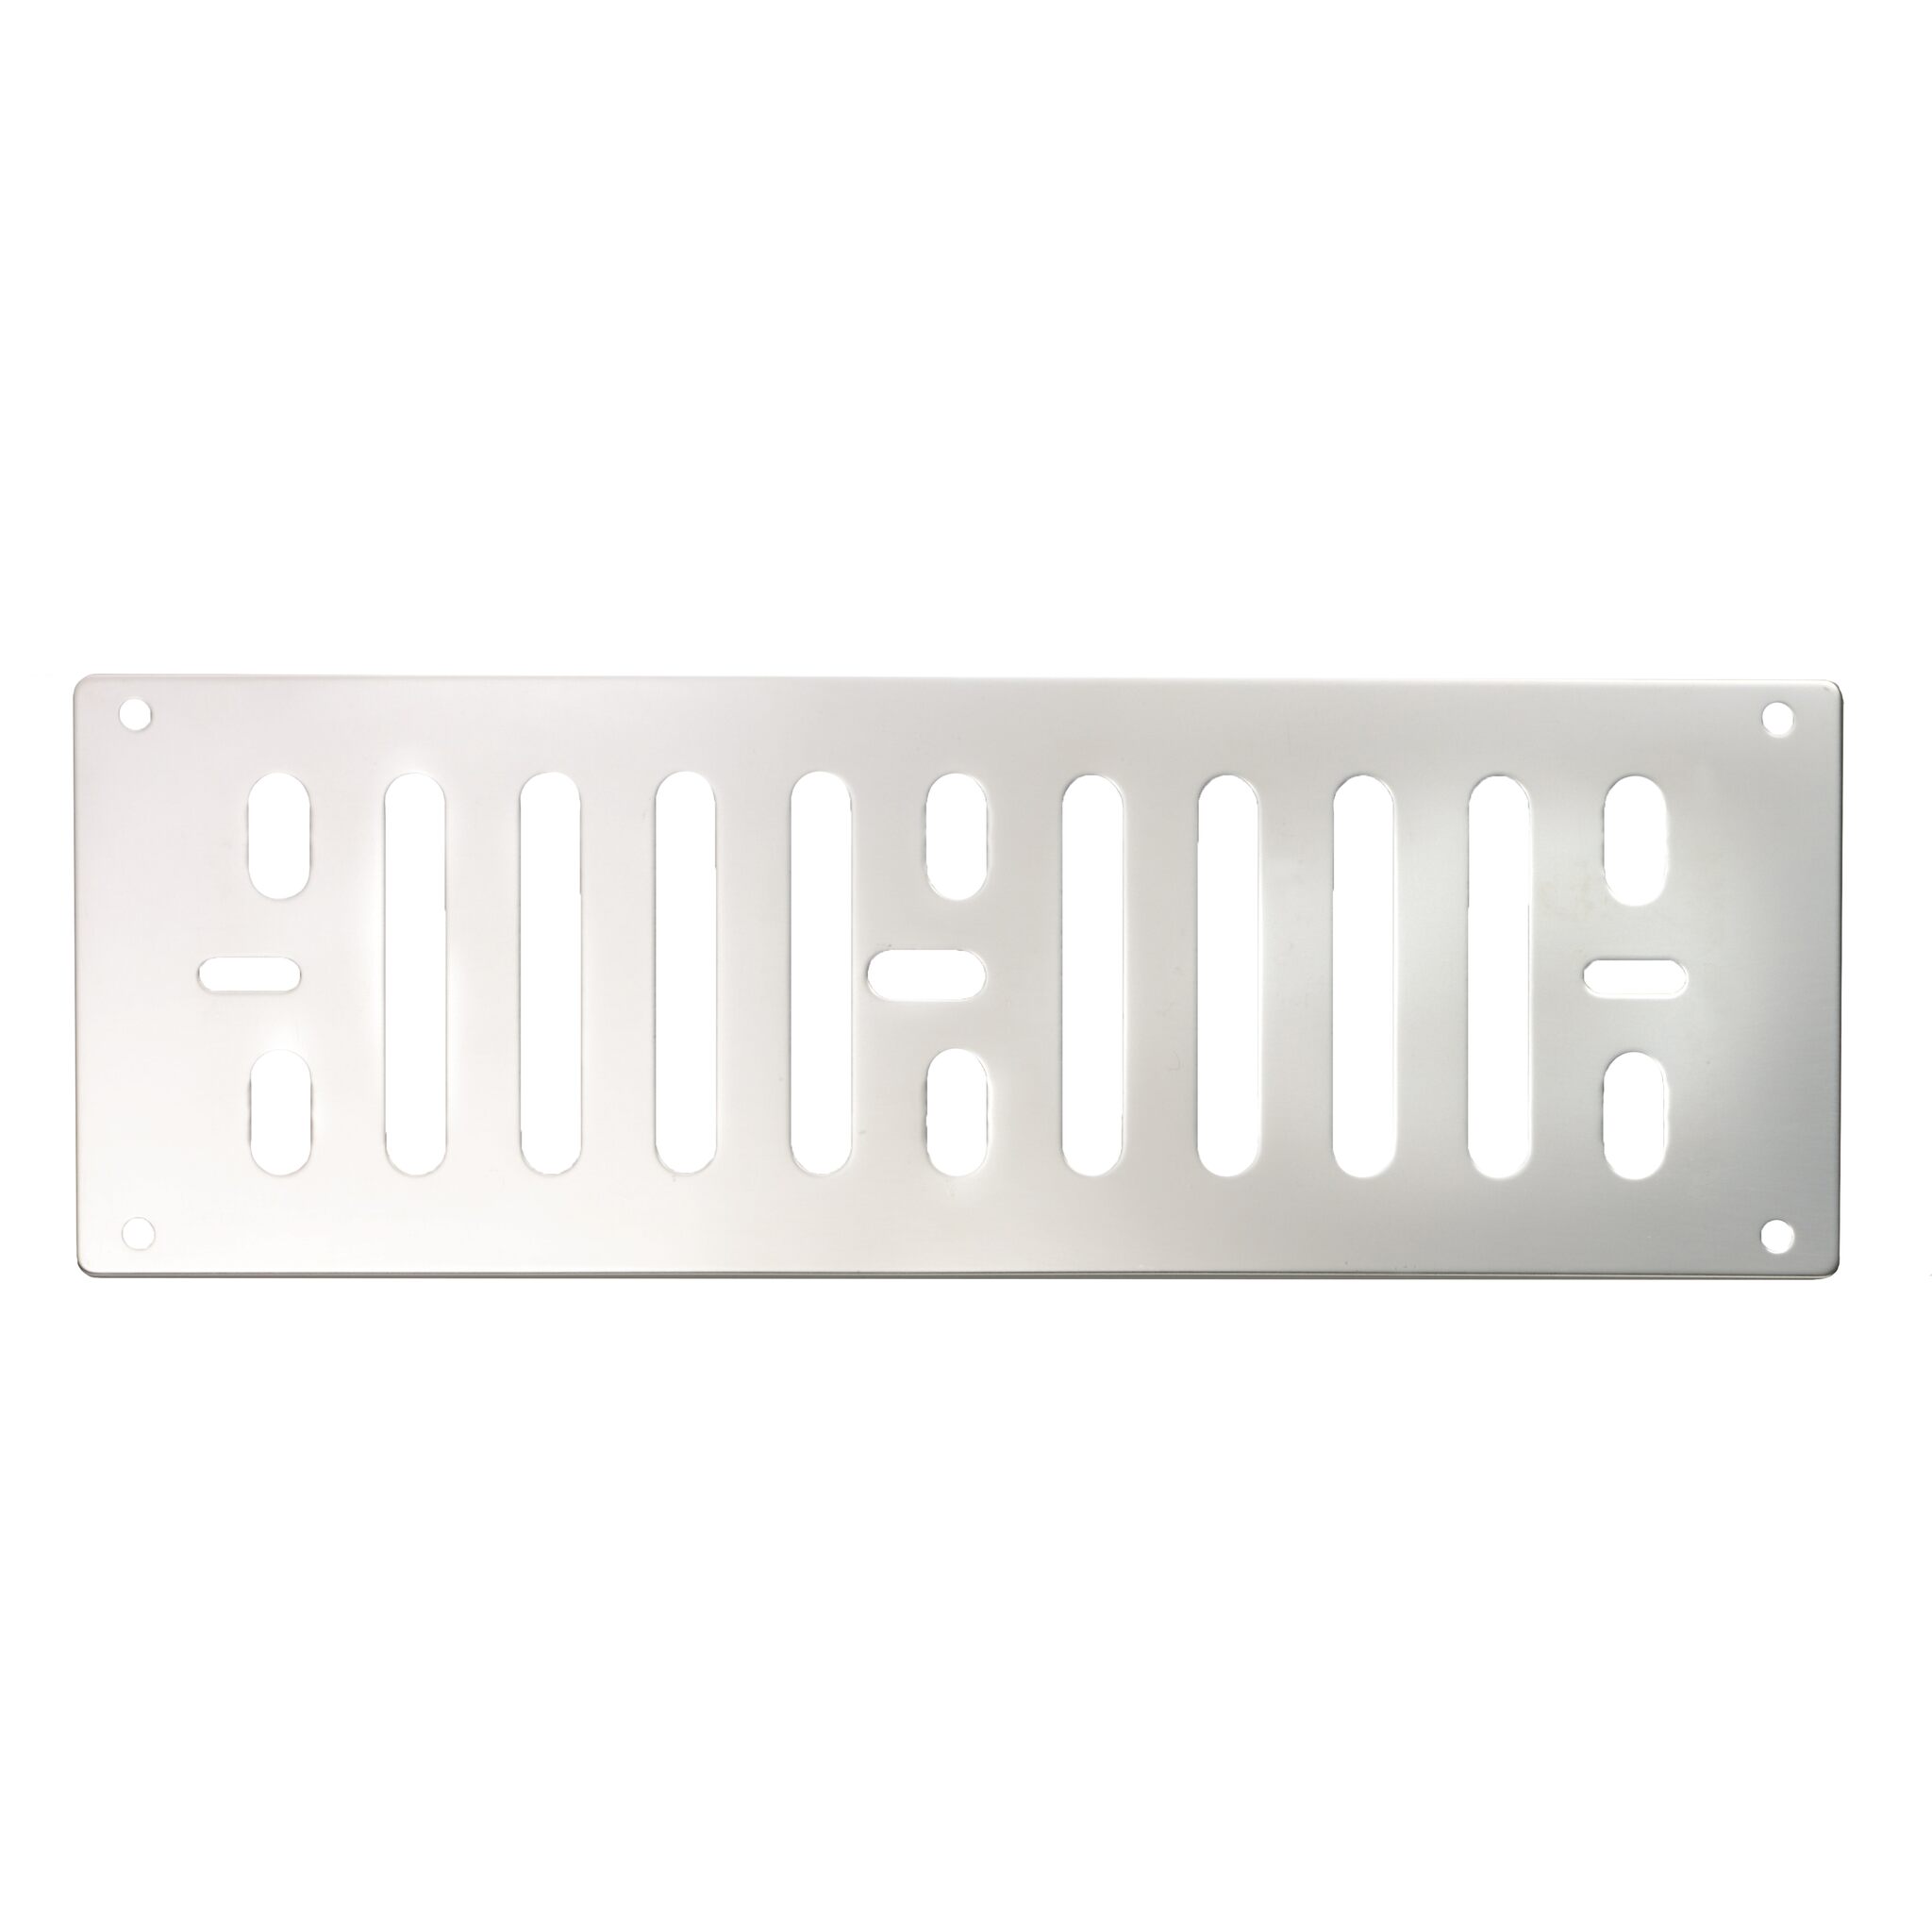 Counter plate Niro 230 x 76 mm